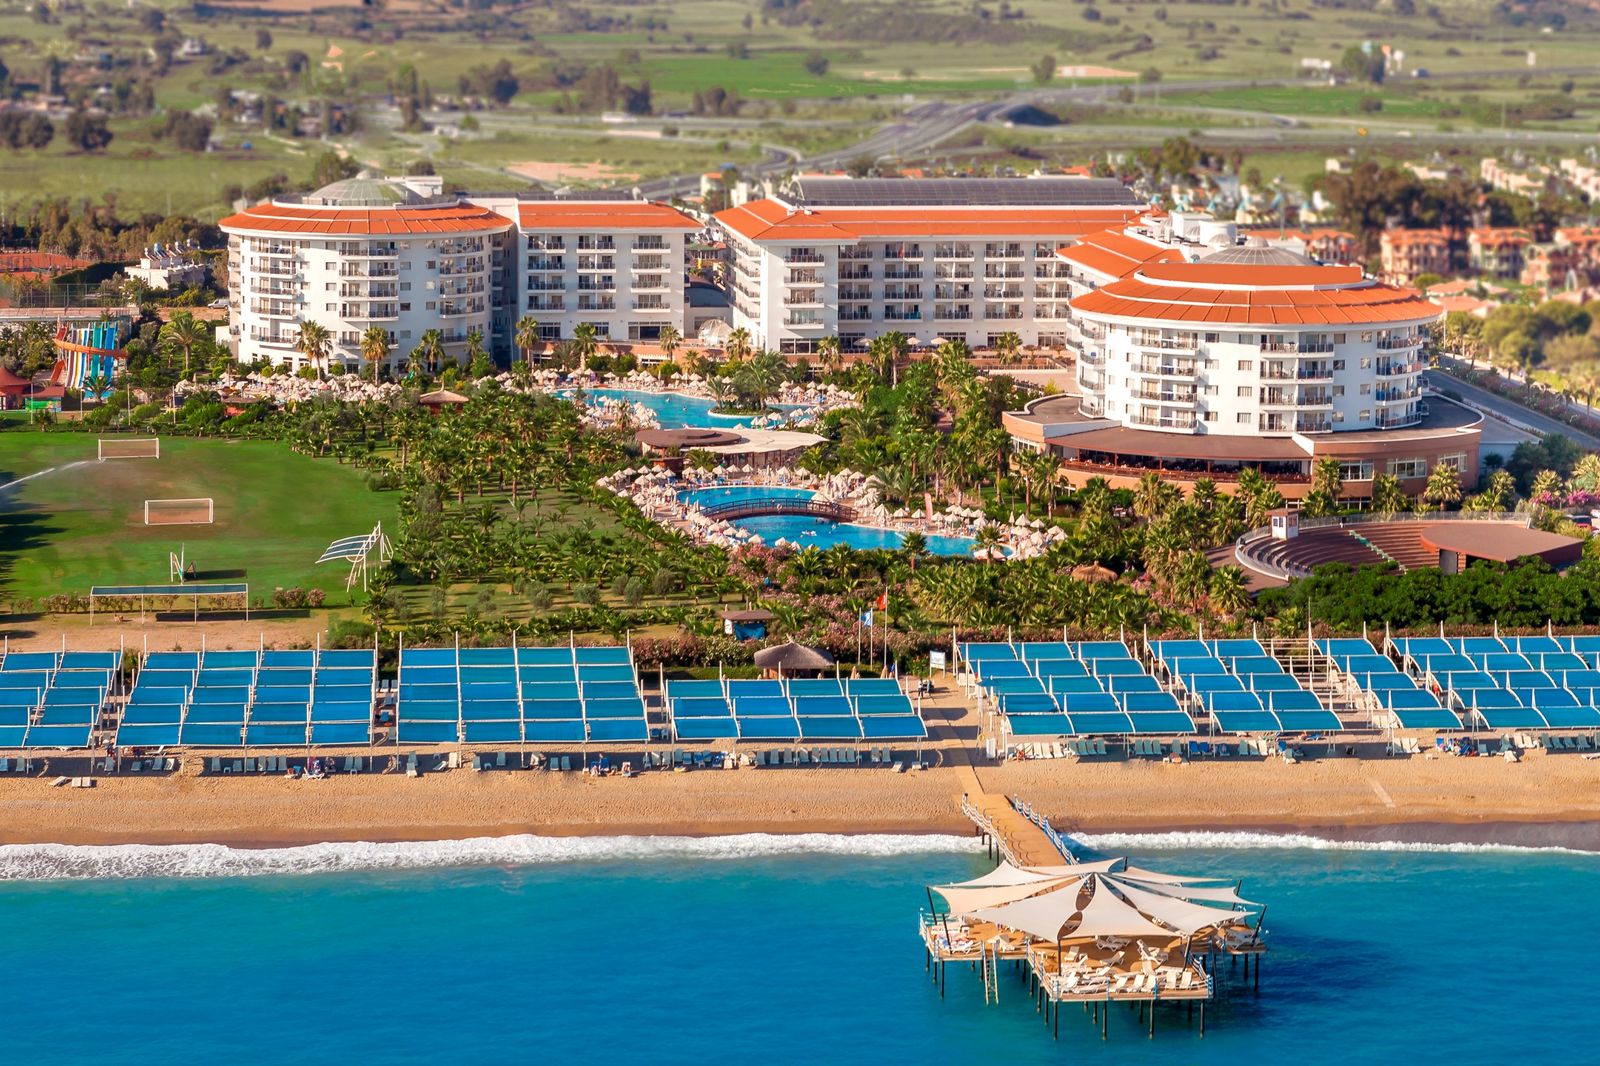 Seaden Sea World Resort&Spa - Turkije - Turkse Riviera - Kizilagac